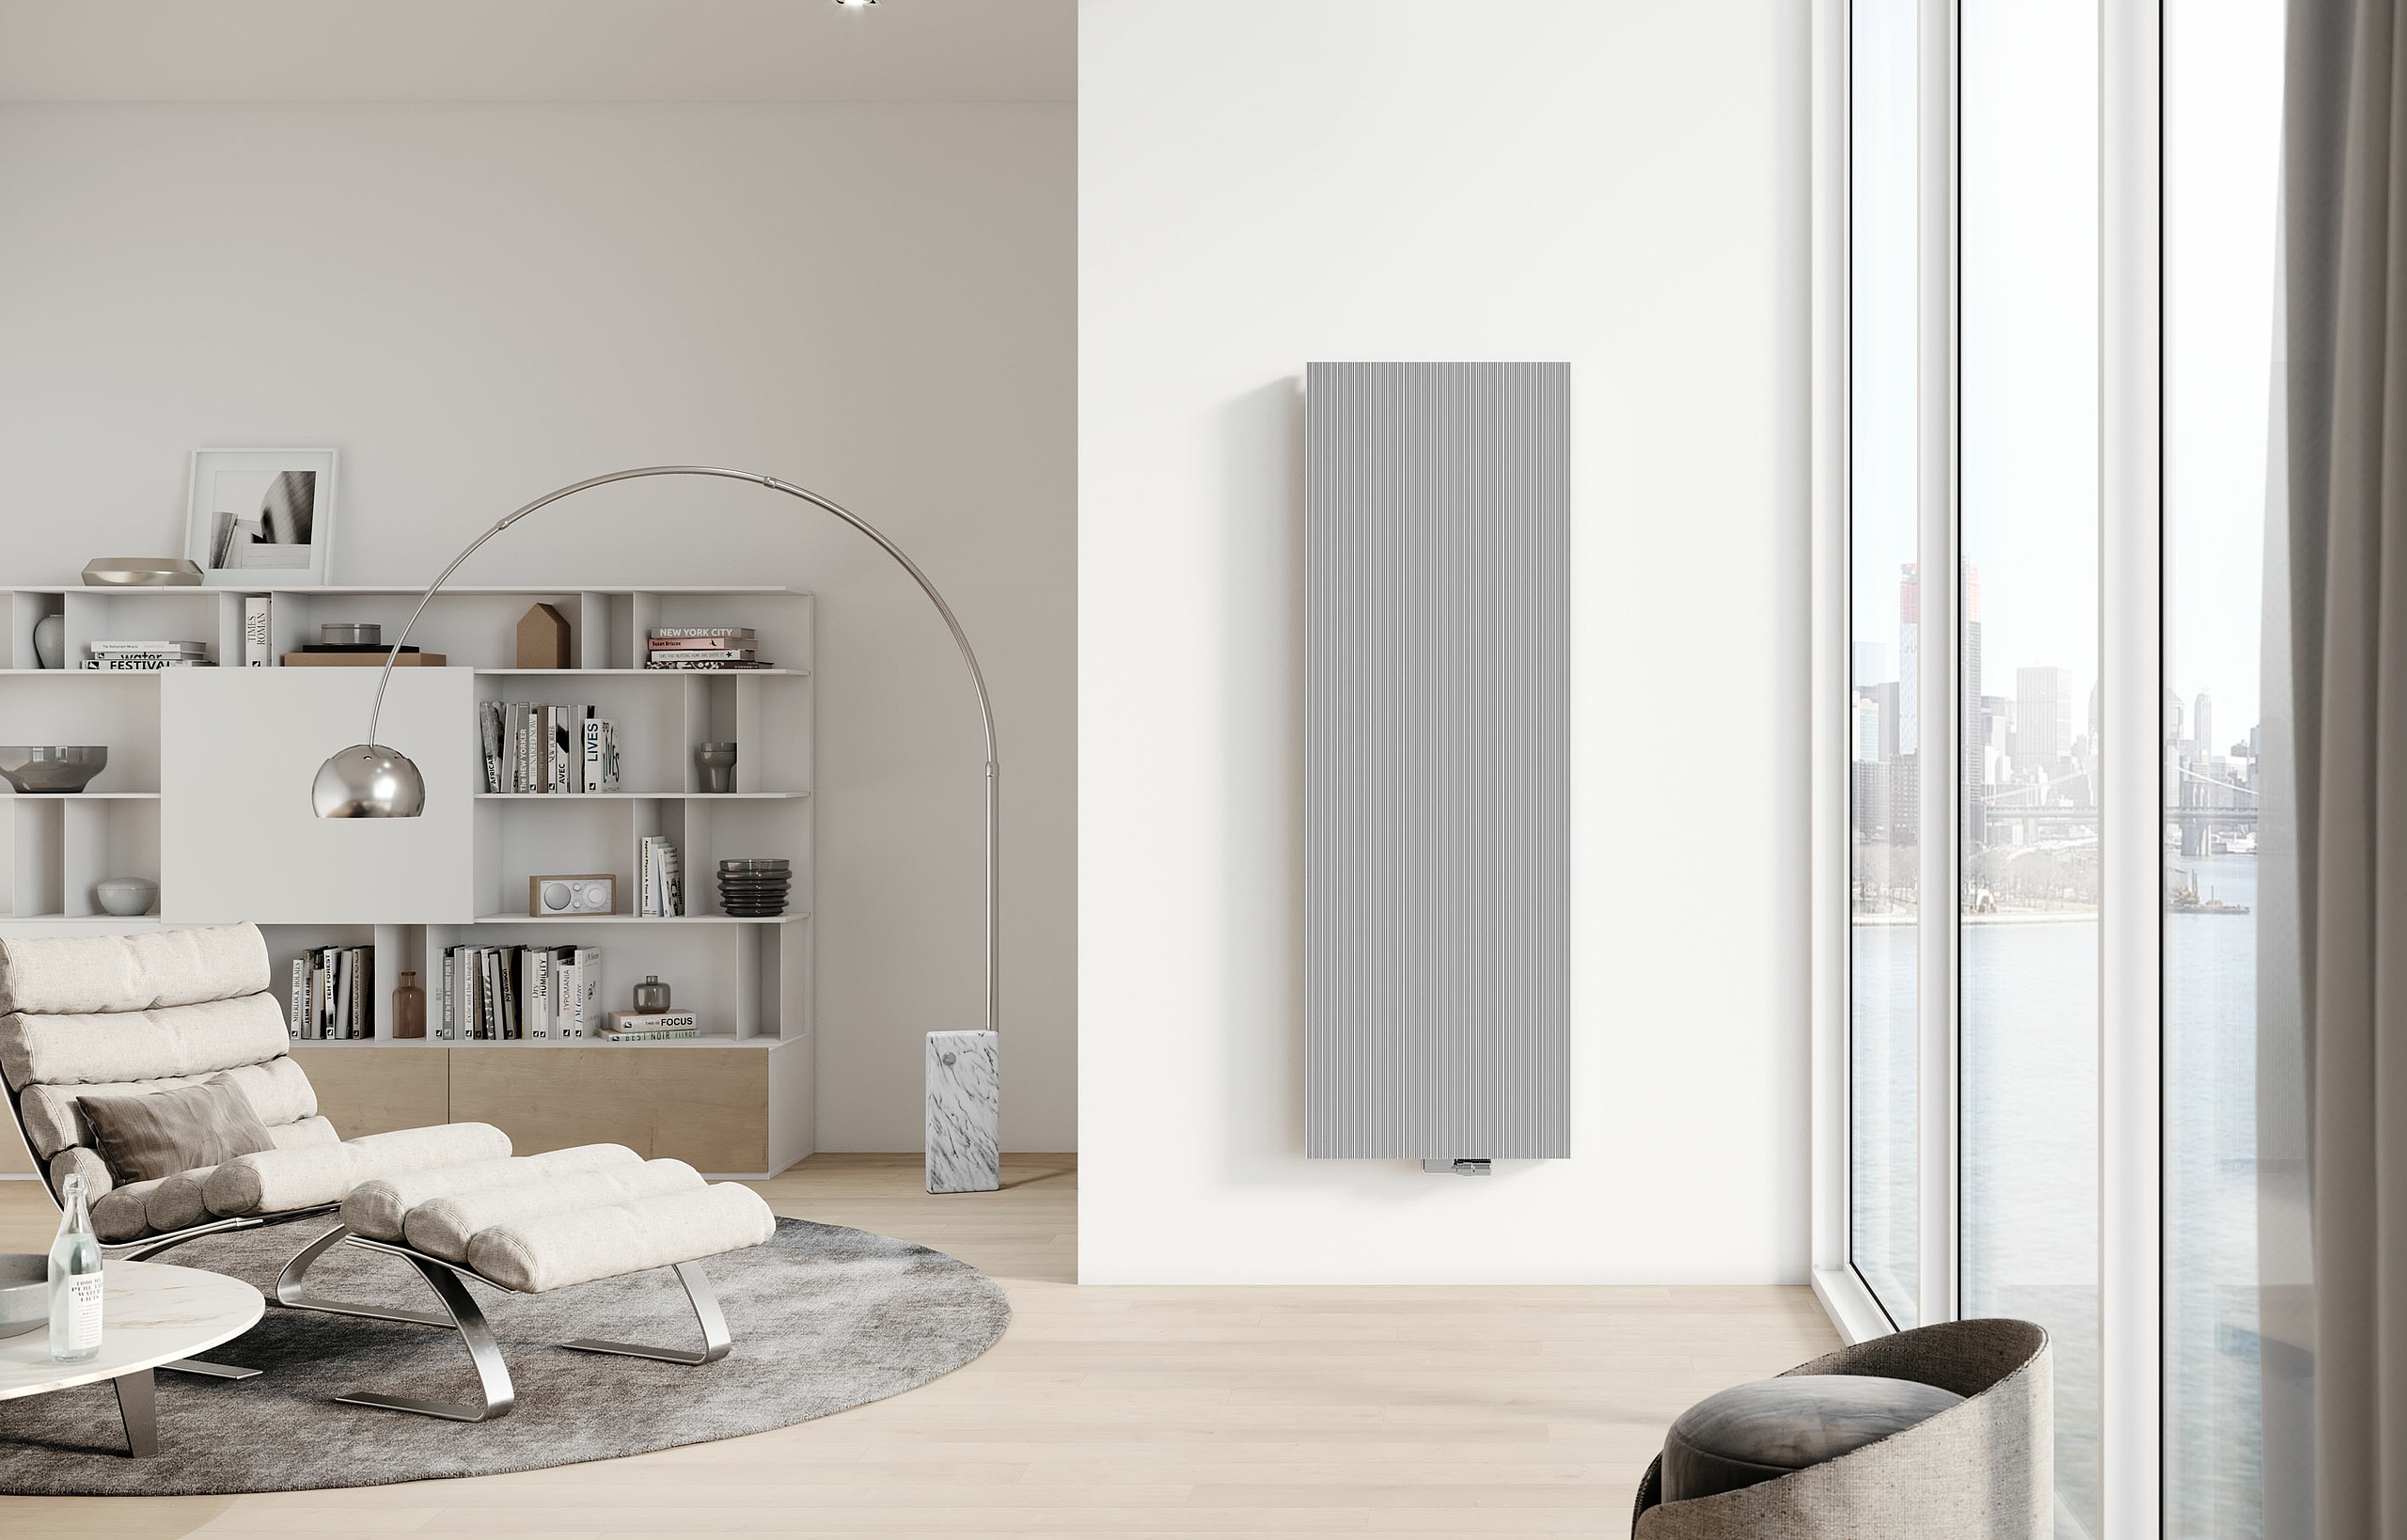 Kermi Decor-Arte Line design and bathroom radiators with a fine, irregular surface texture.